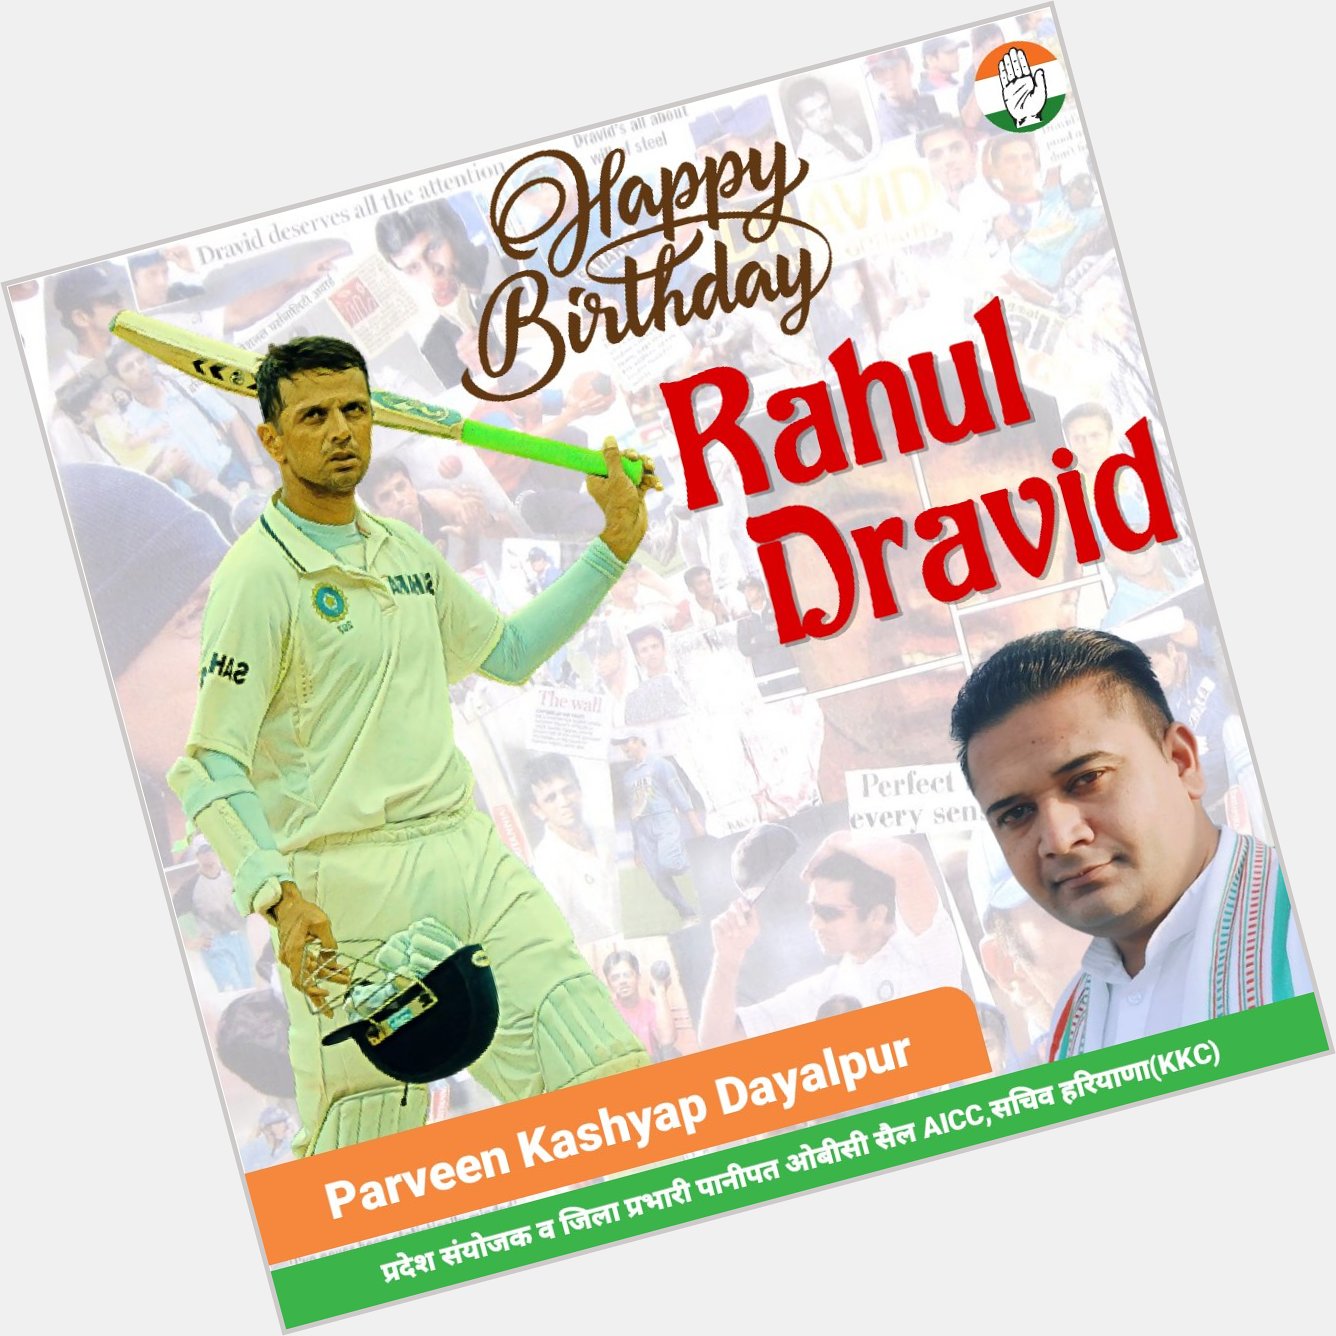 Happy Birthday Rahul Dravid 